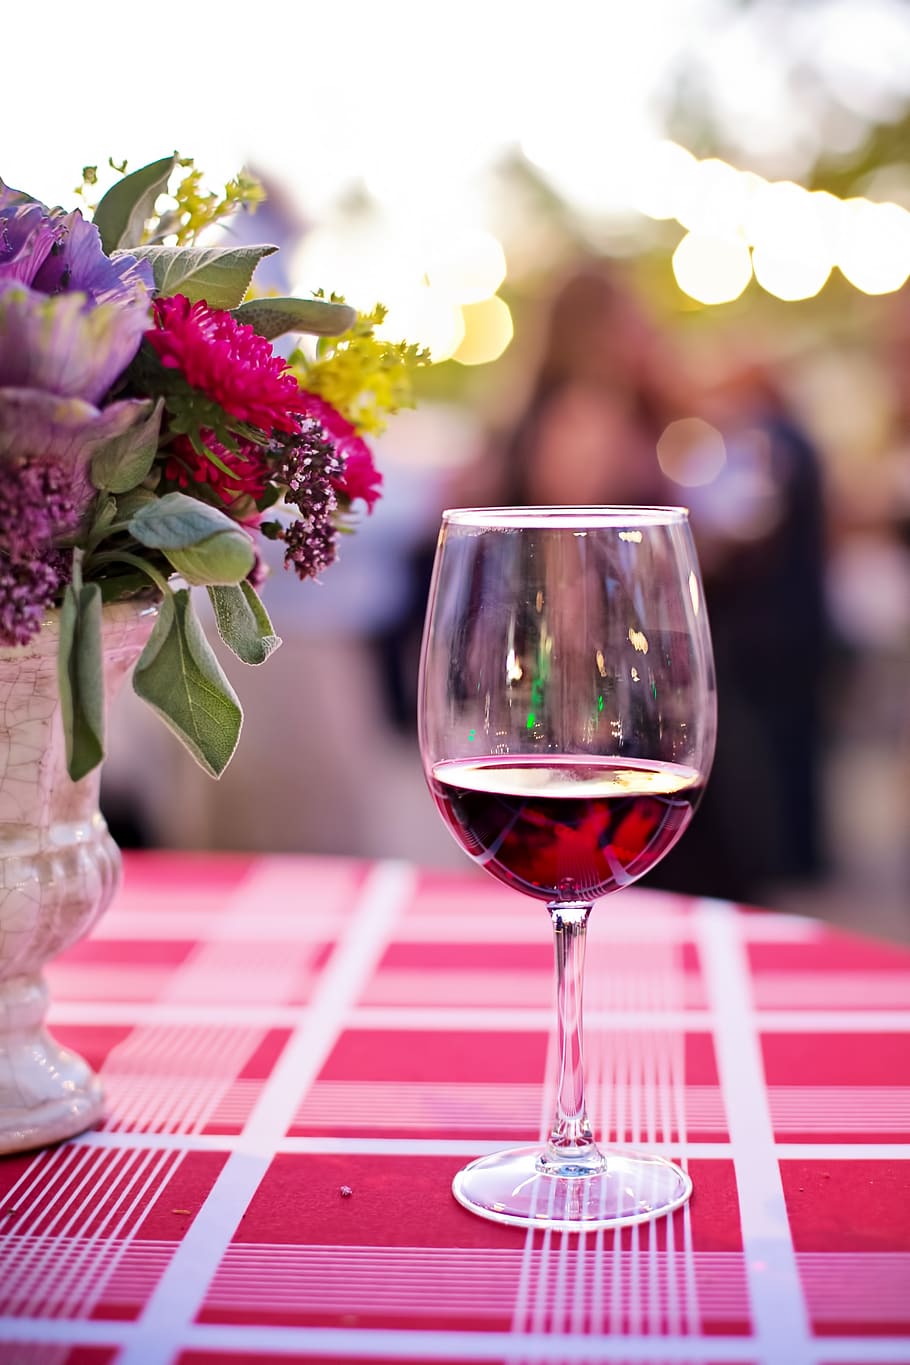 segelas anggur, merah, anggur, piala, minuman, alkohol, gelas anggur, perayaan, bunga, tanaman berbunga